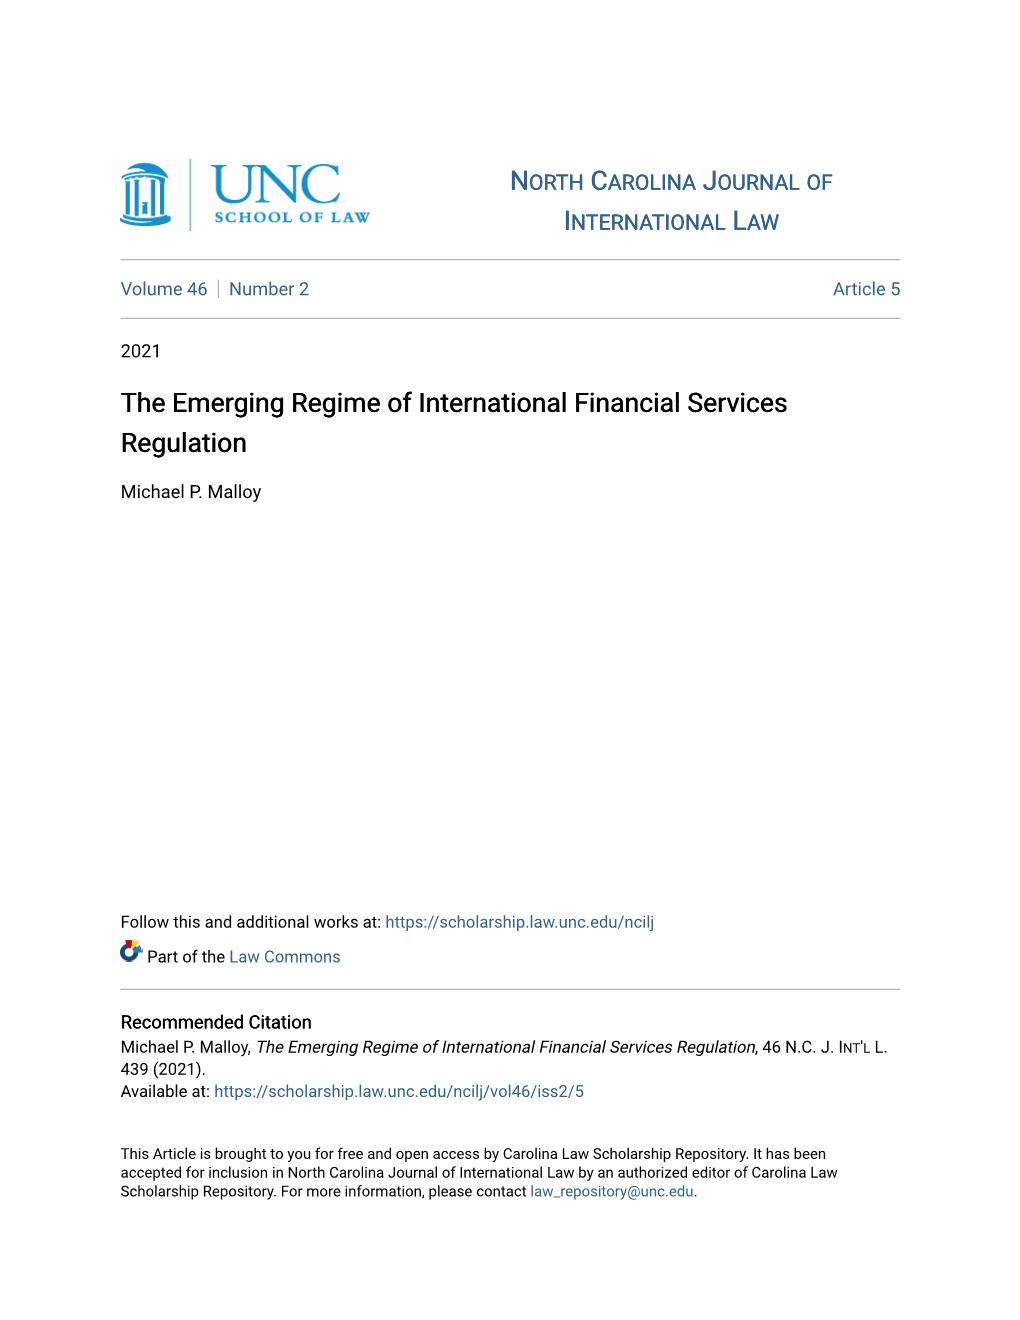 The Emerging Regime of International Financial Services Regulation